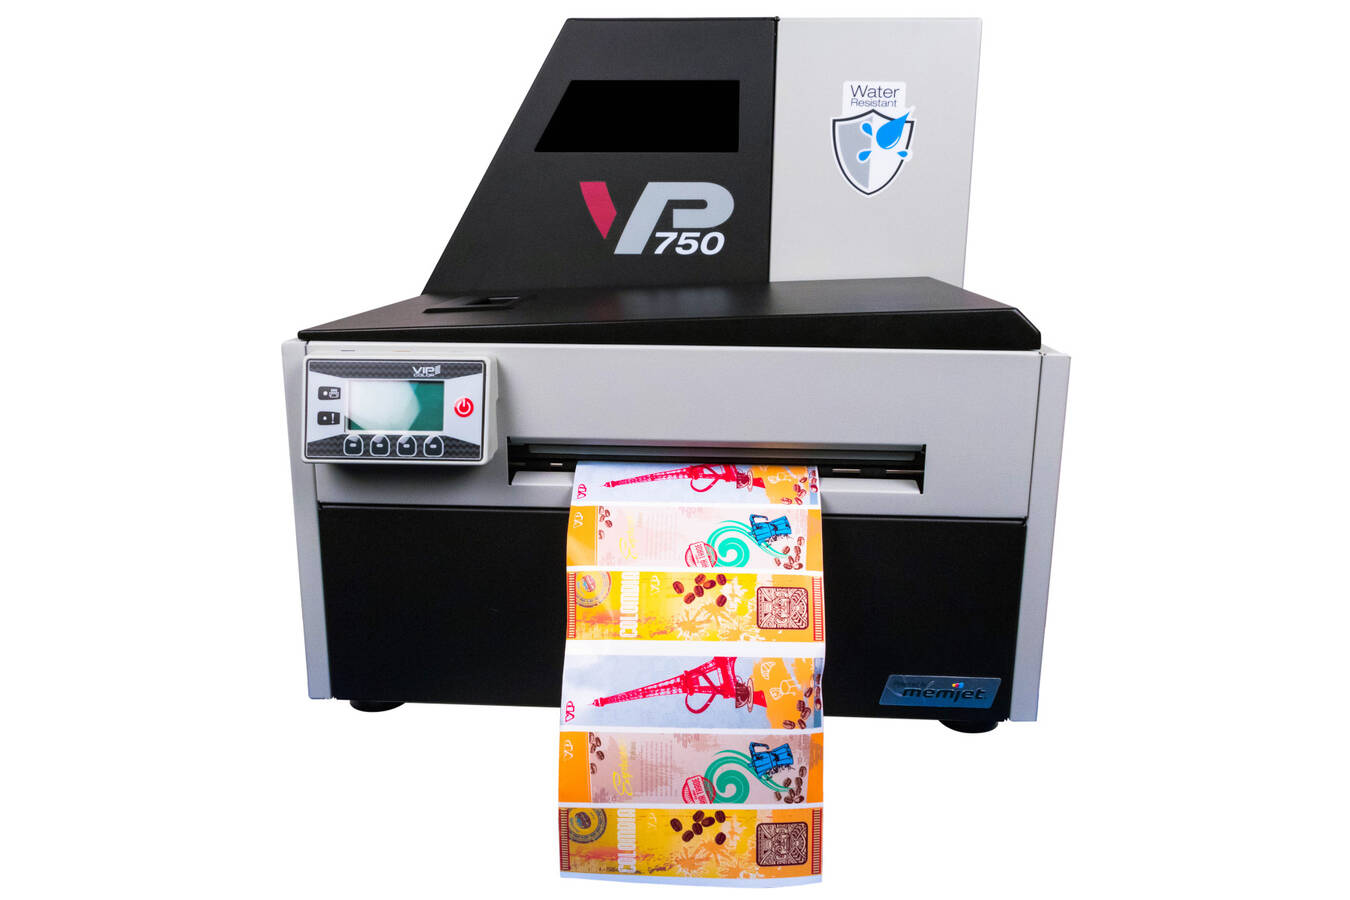 Brady’s VP750 Label Printer